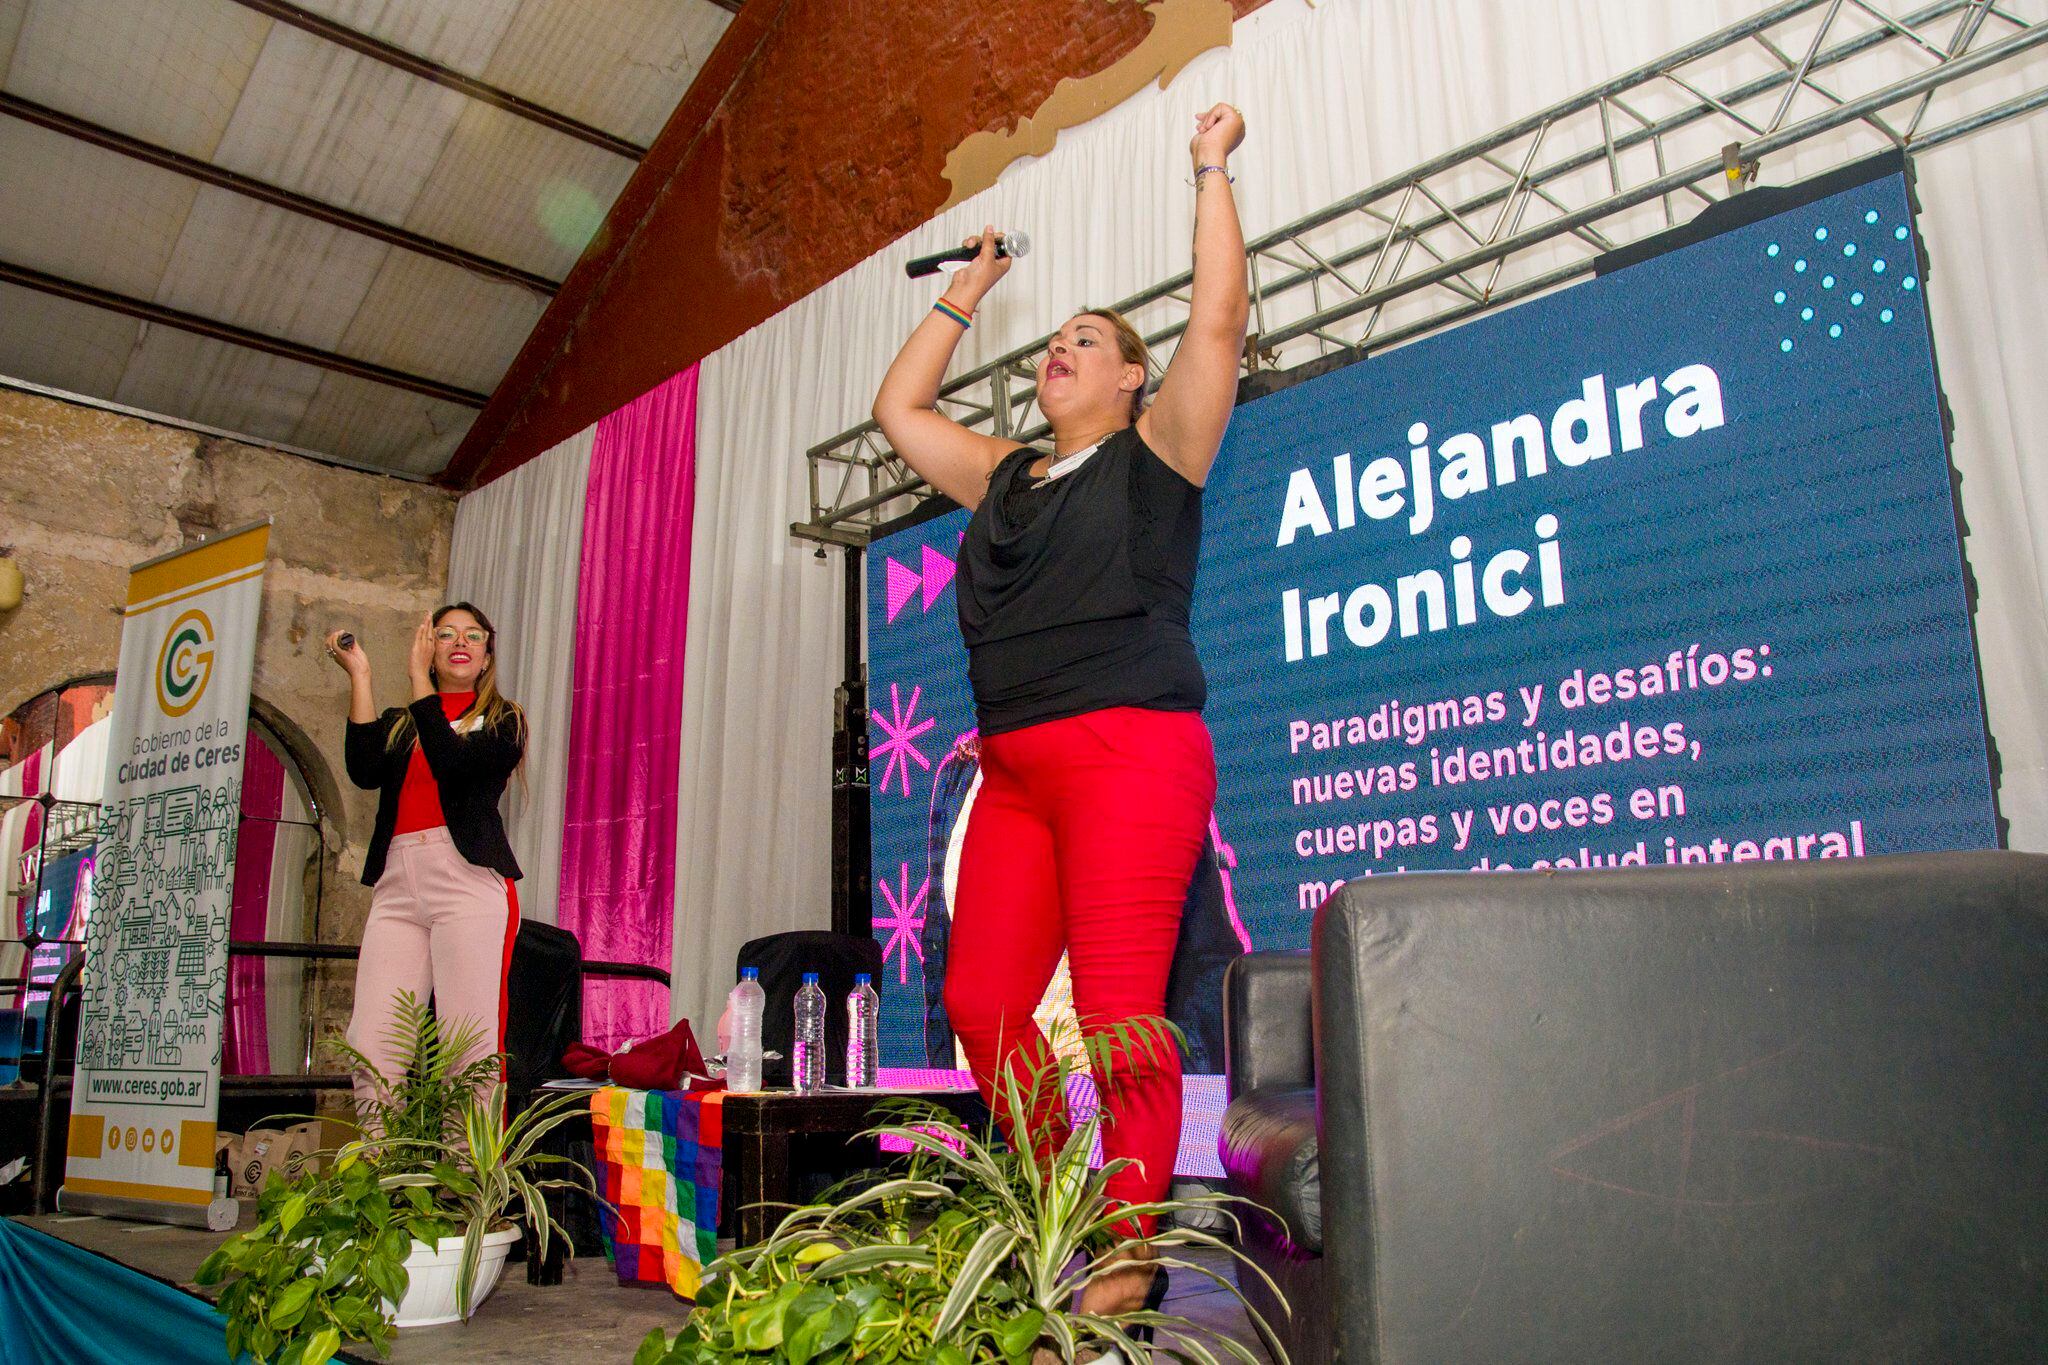 Asesinan a Alejandra Ironici, activista pionera trans de Argentina; acusan crimen de odio